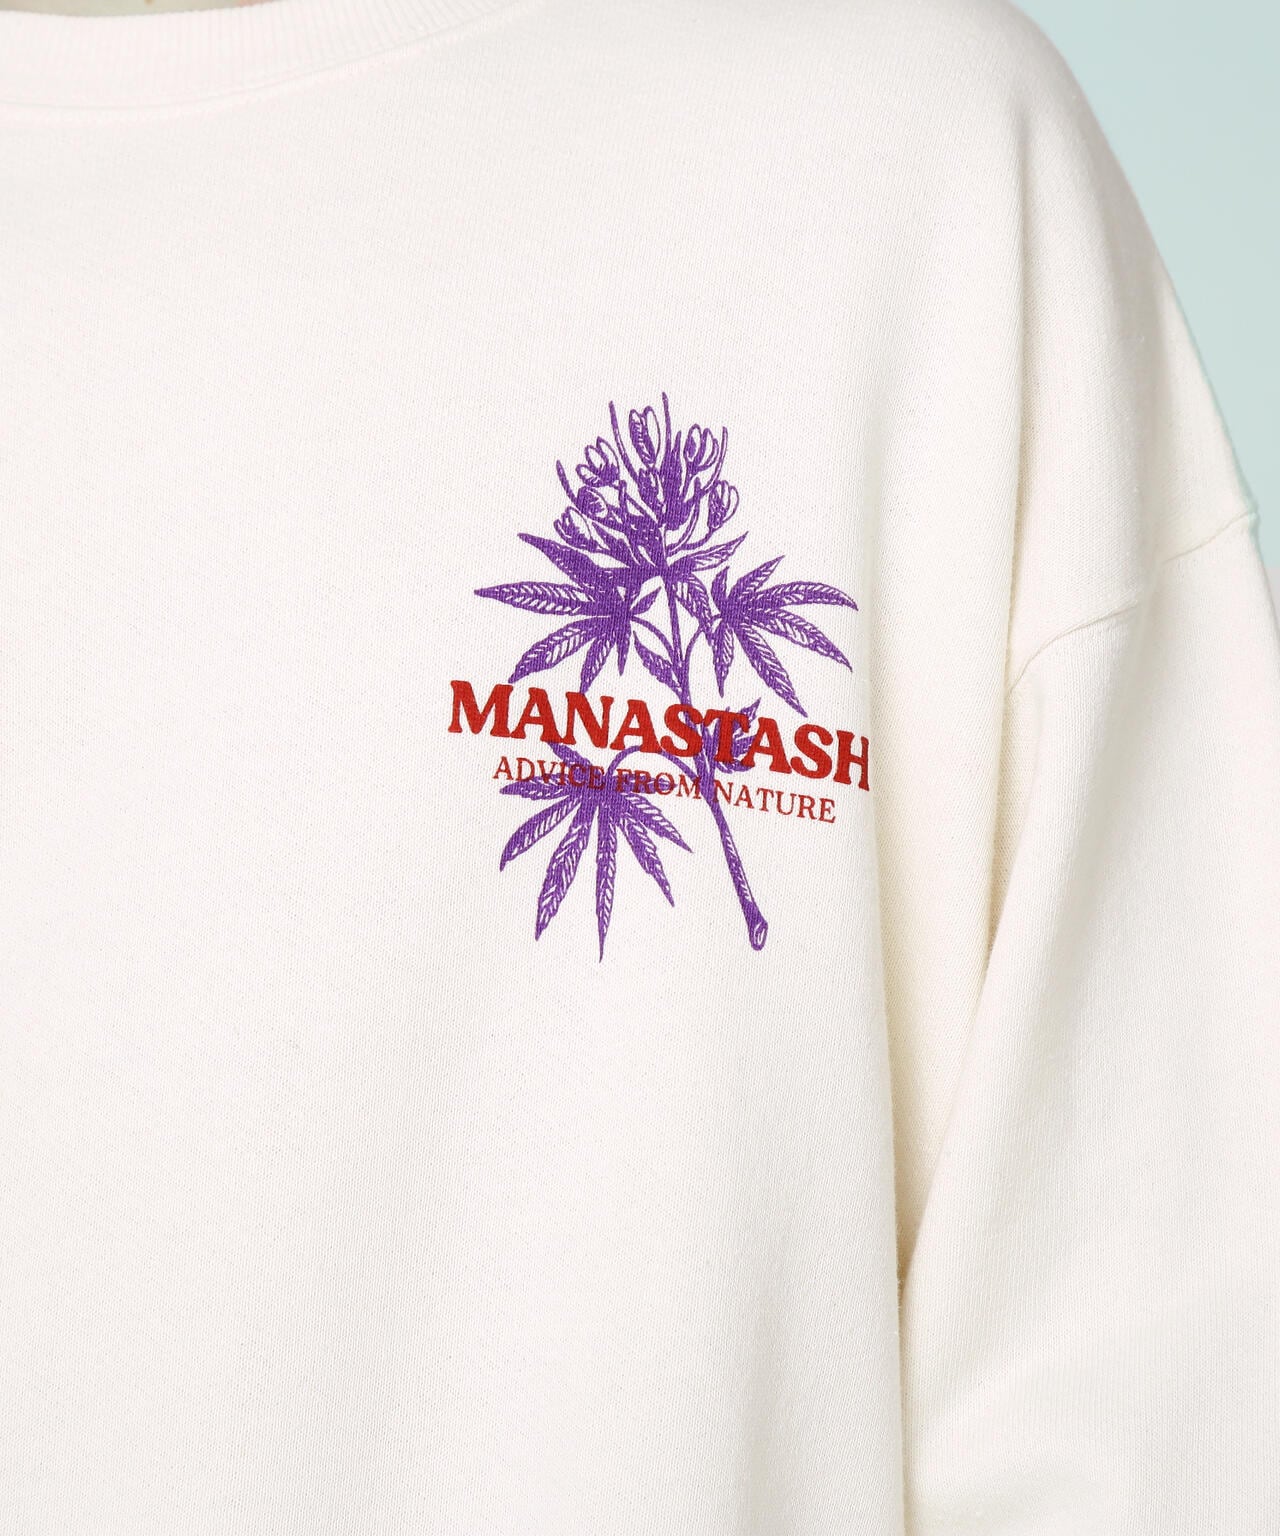 MANASTASH/マナスタッシュ/CASCADE SWEATSHIRTS AFN | MANASTASH